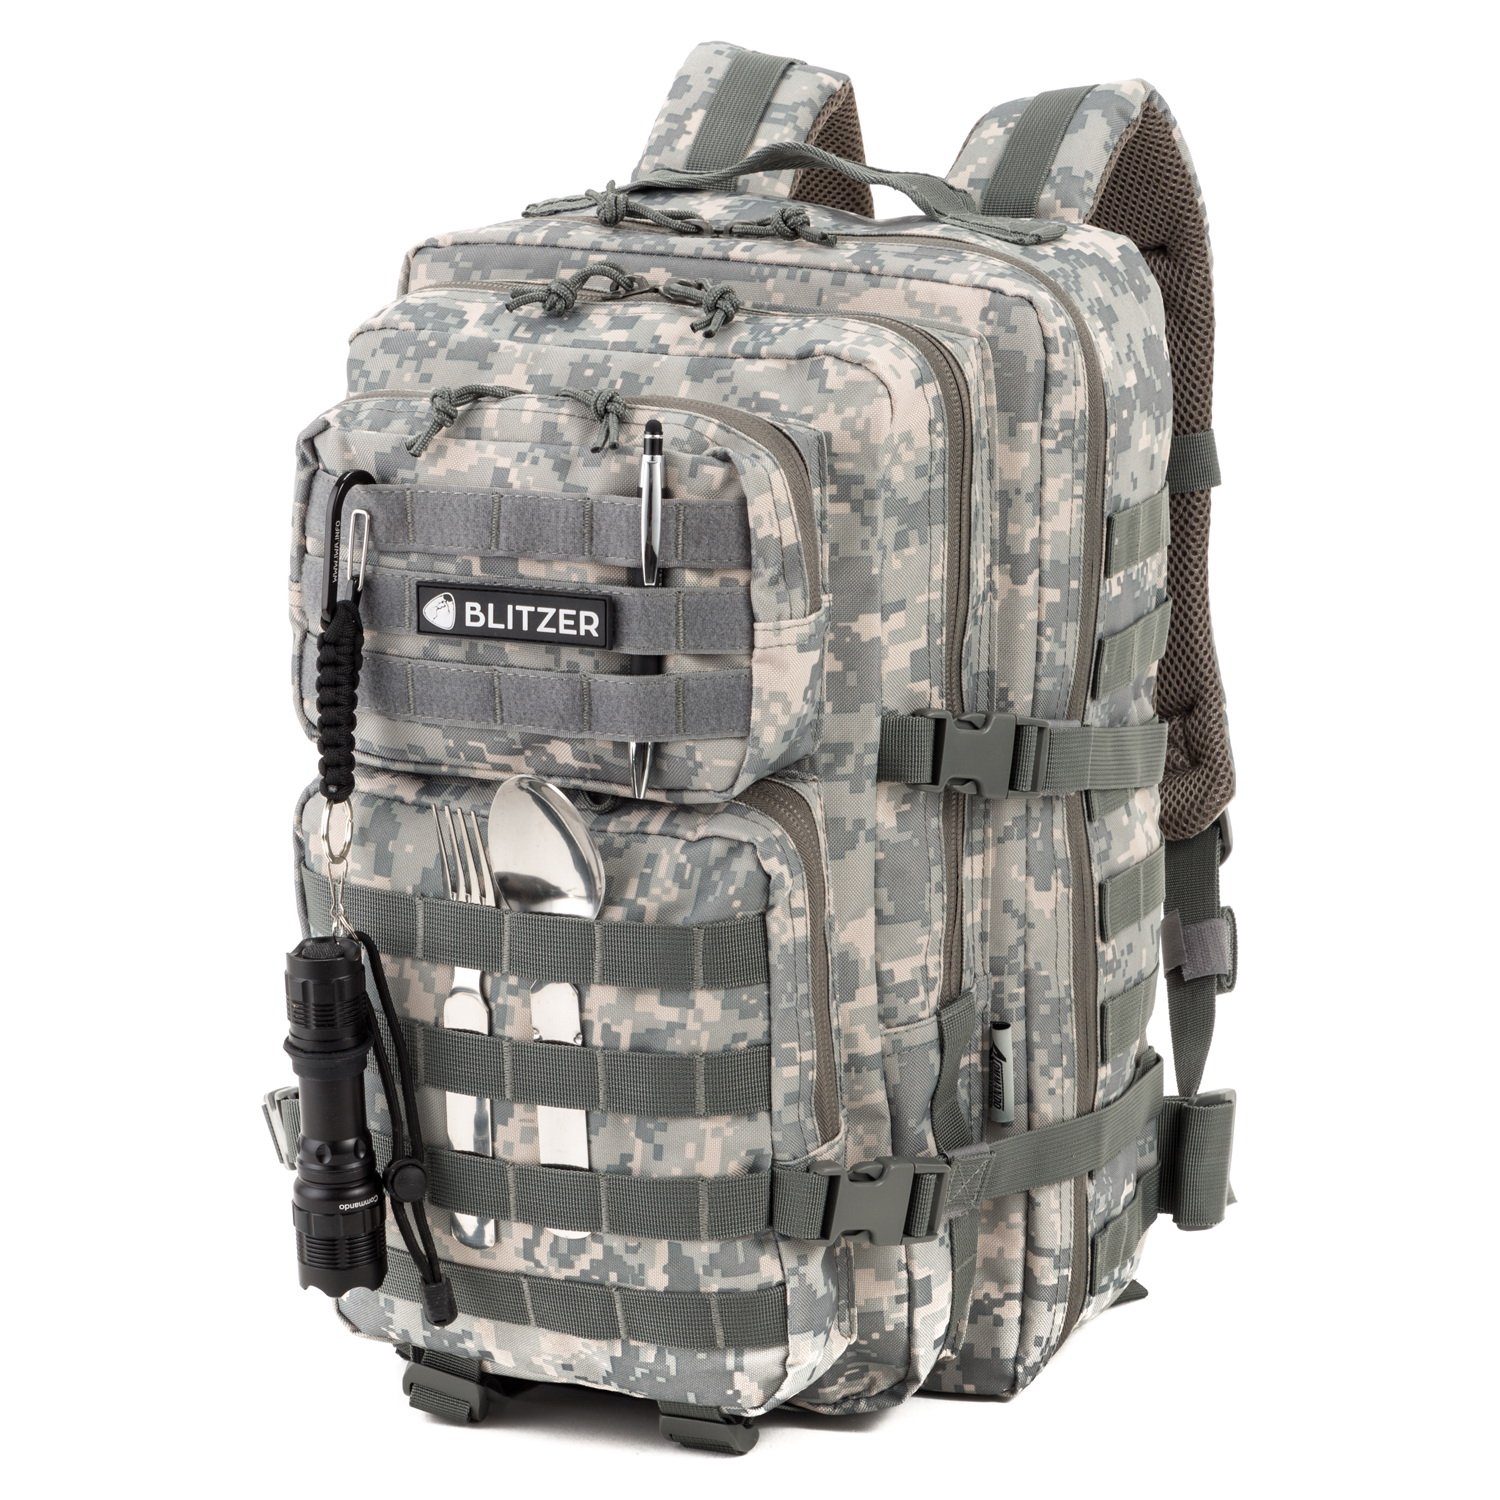 Commando-Industries Rucksack US Army Assault Pack II Digital Camo